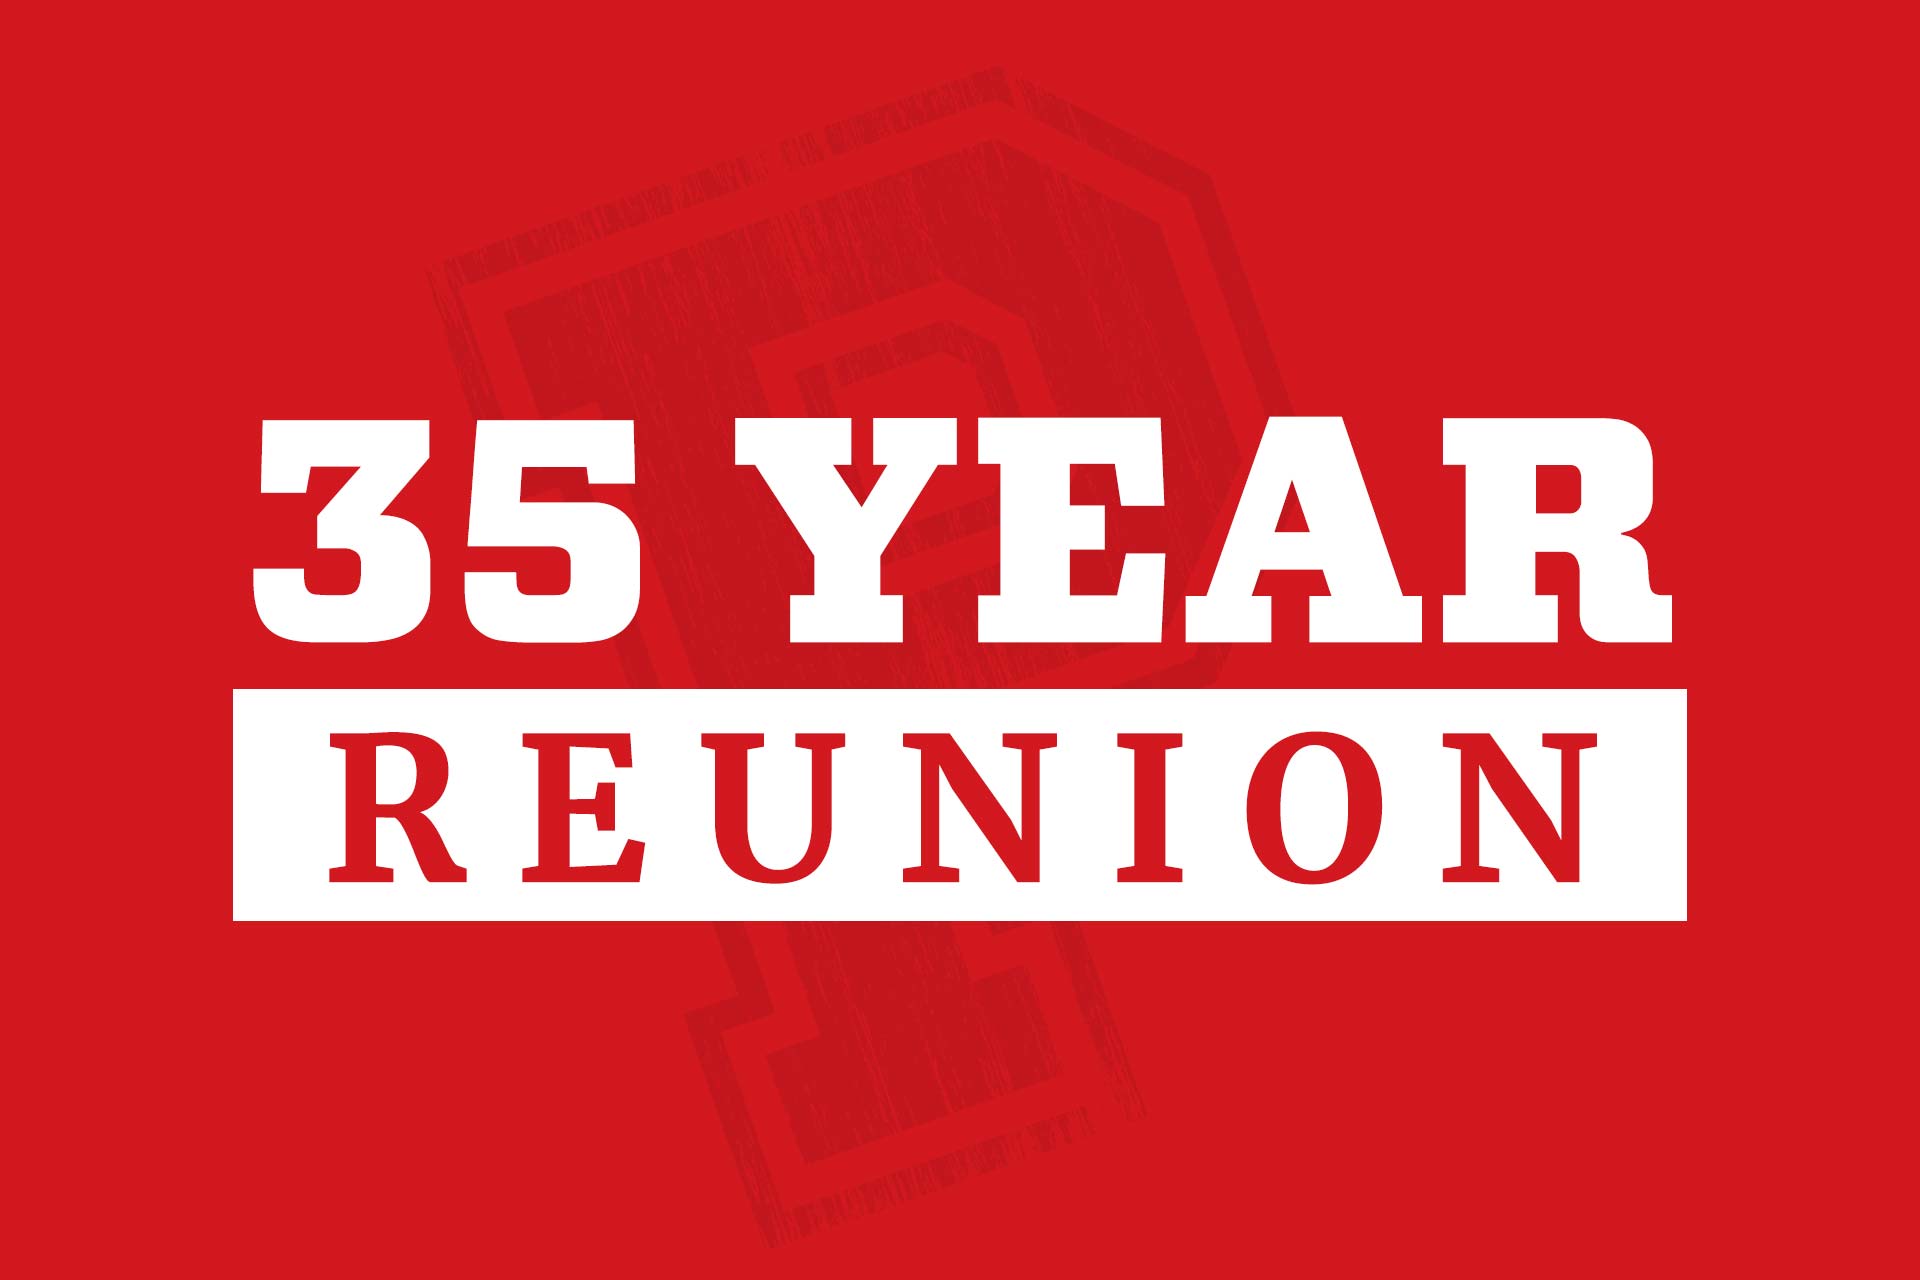 35 Year Reunion